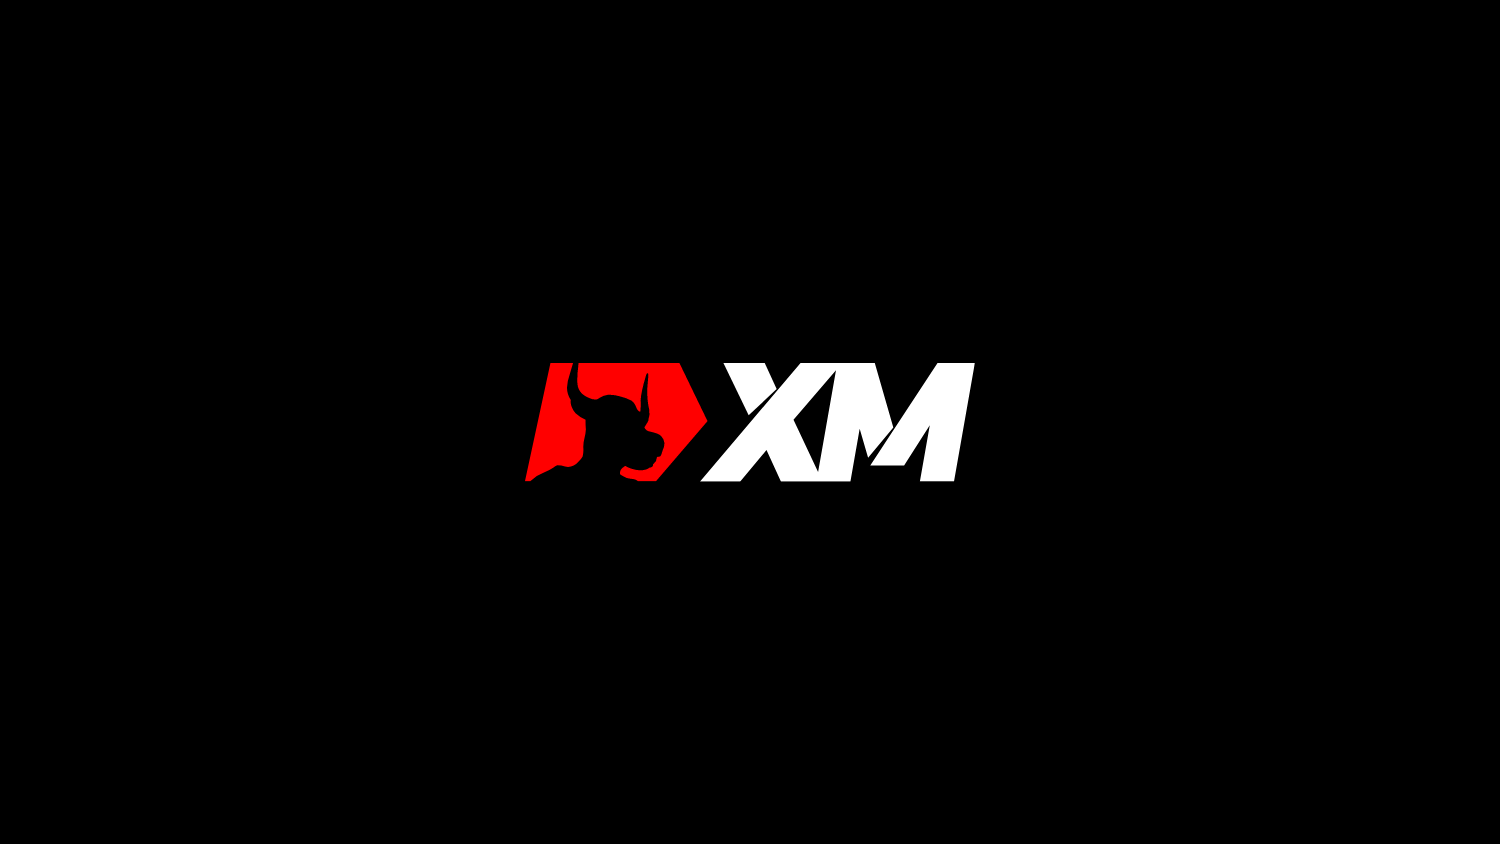 Exness vs XM, Mana Broker Forex Terbaik (2023)